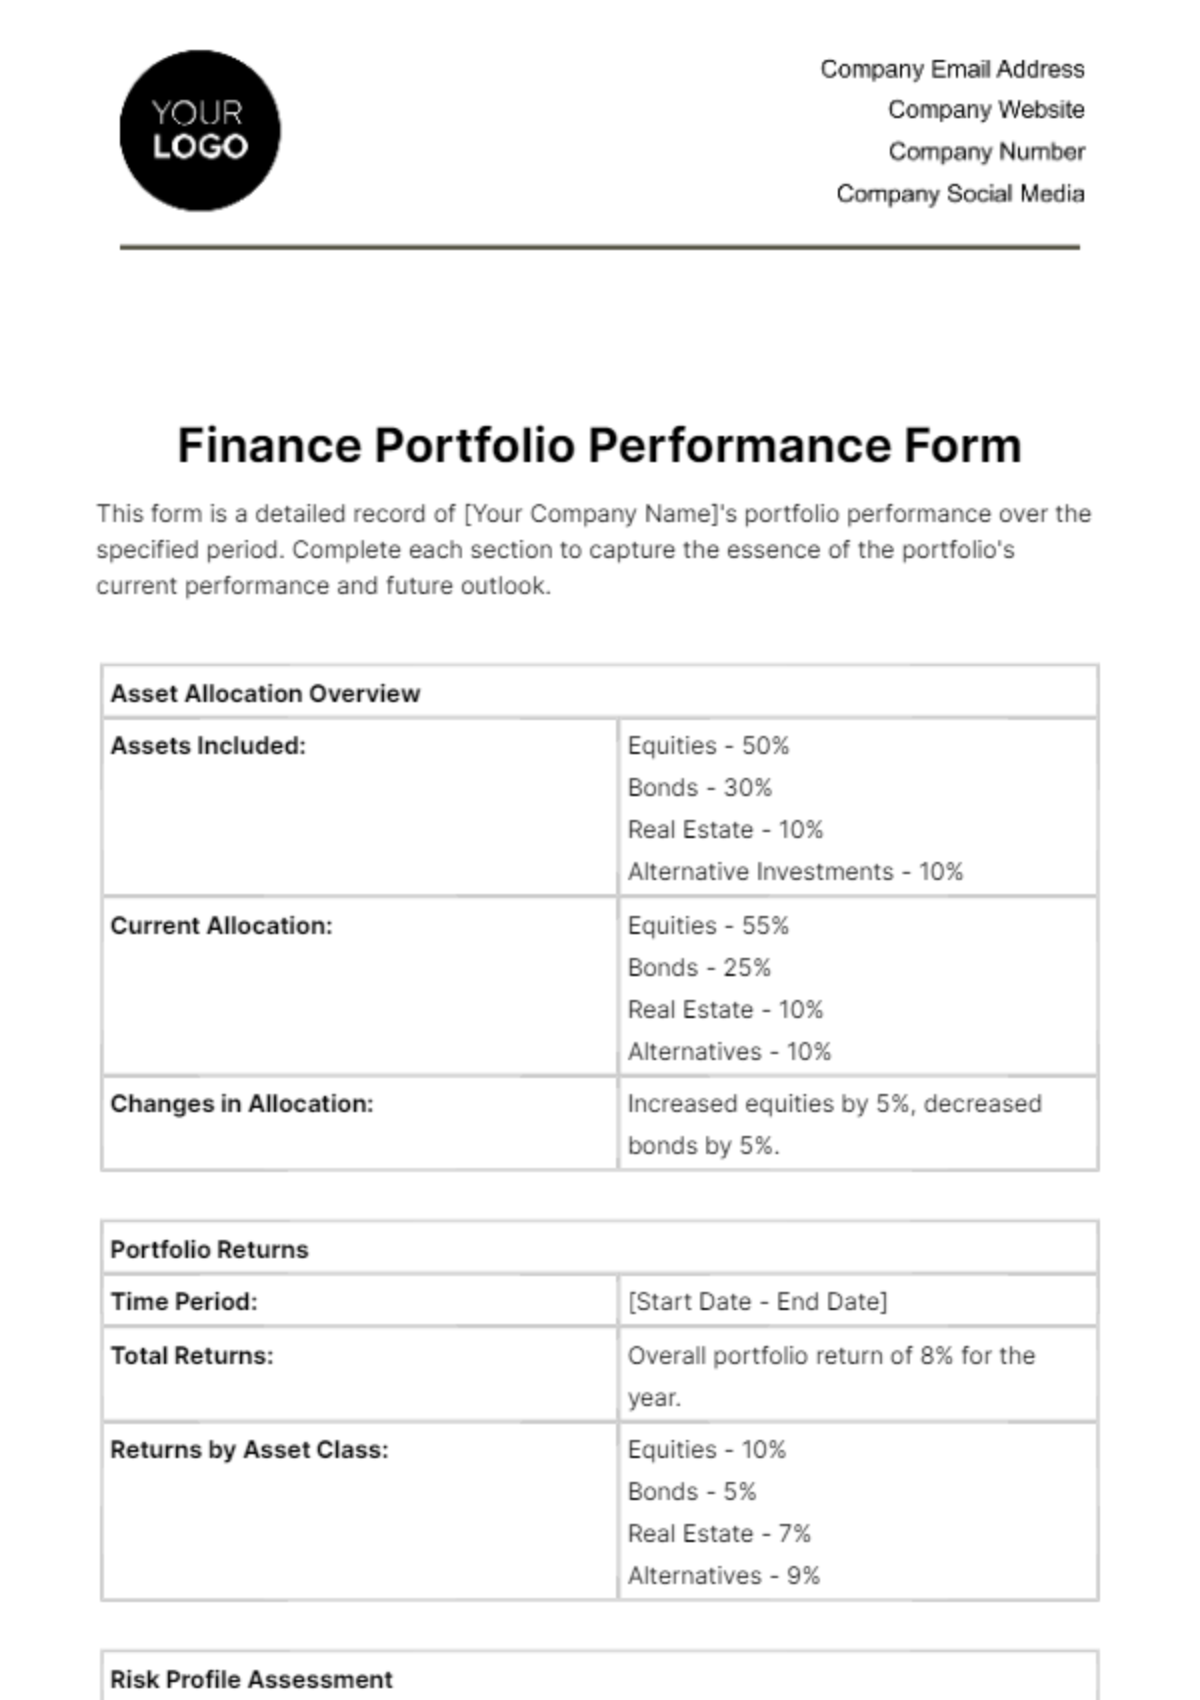 Free Finance Portfolio Performance Form Template